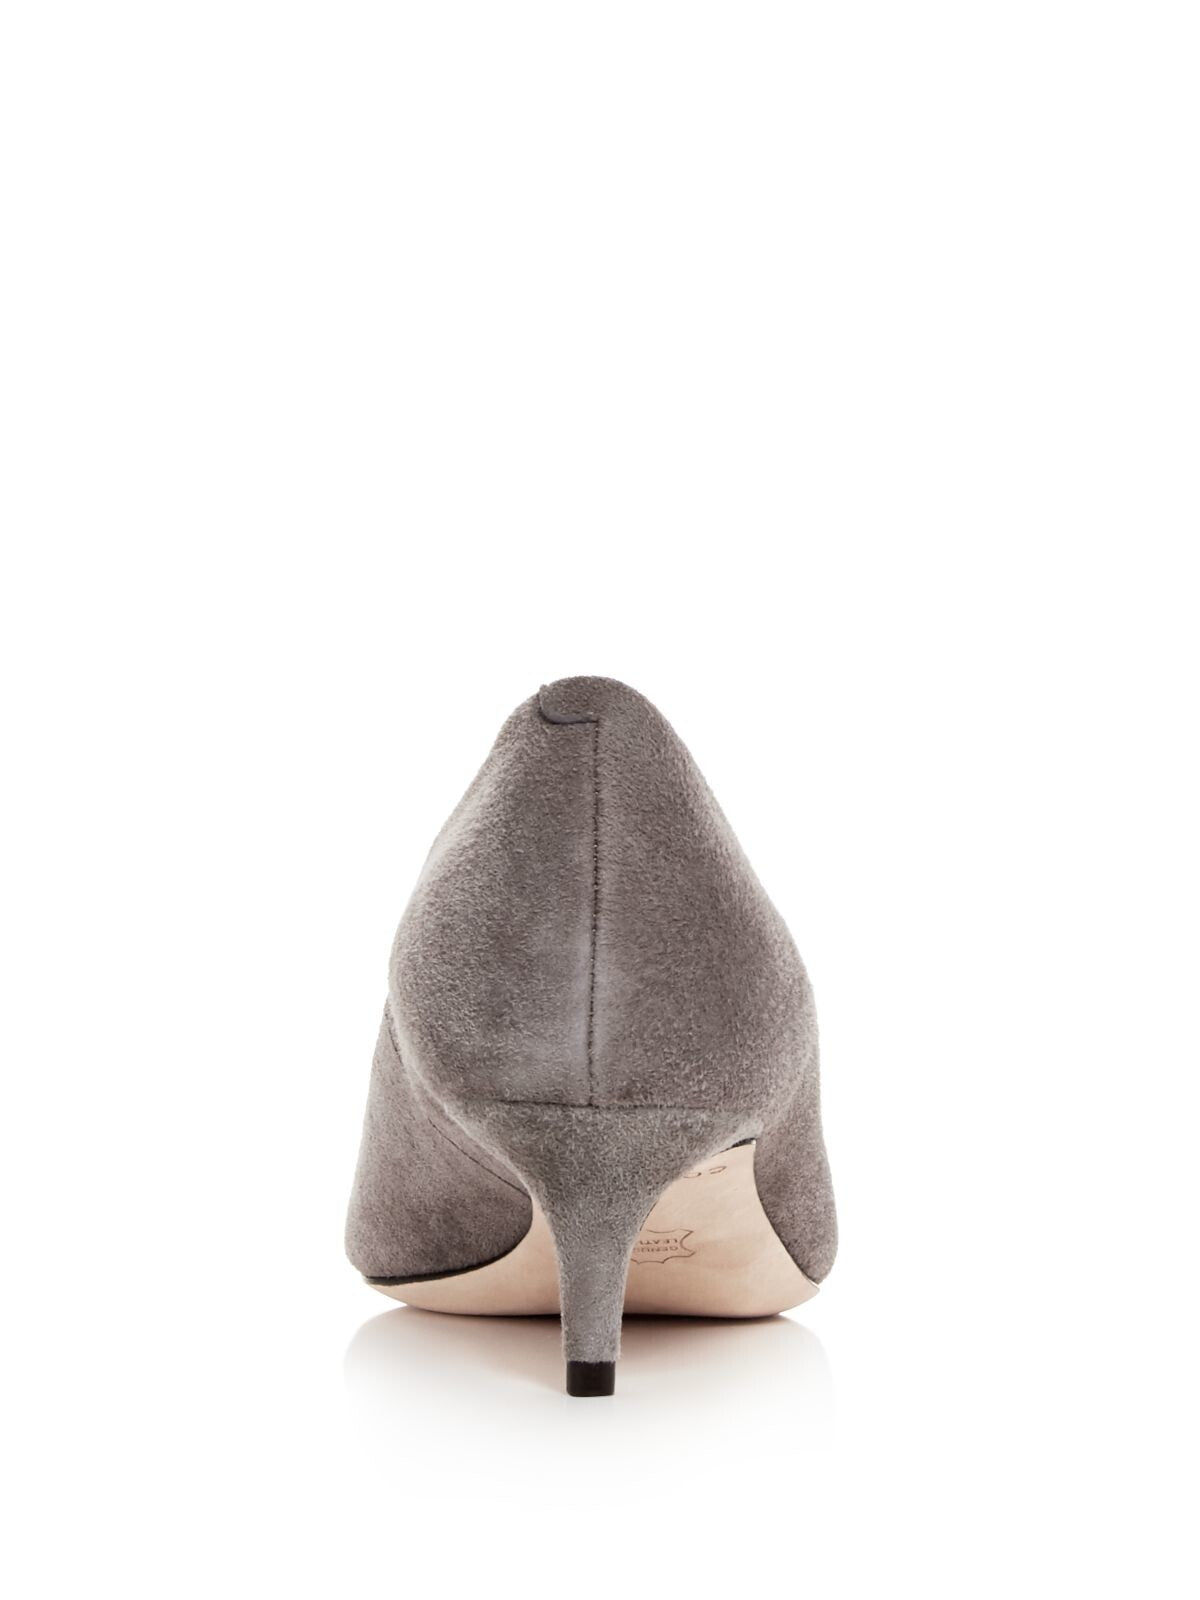 COLE HAAN Womens Gray Vesta Pointed Toe Kitten Heel Slip On Leather Dress Pumps 7.5 B